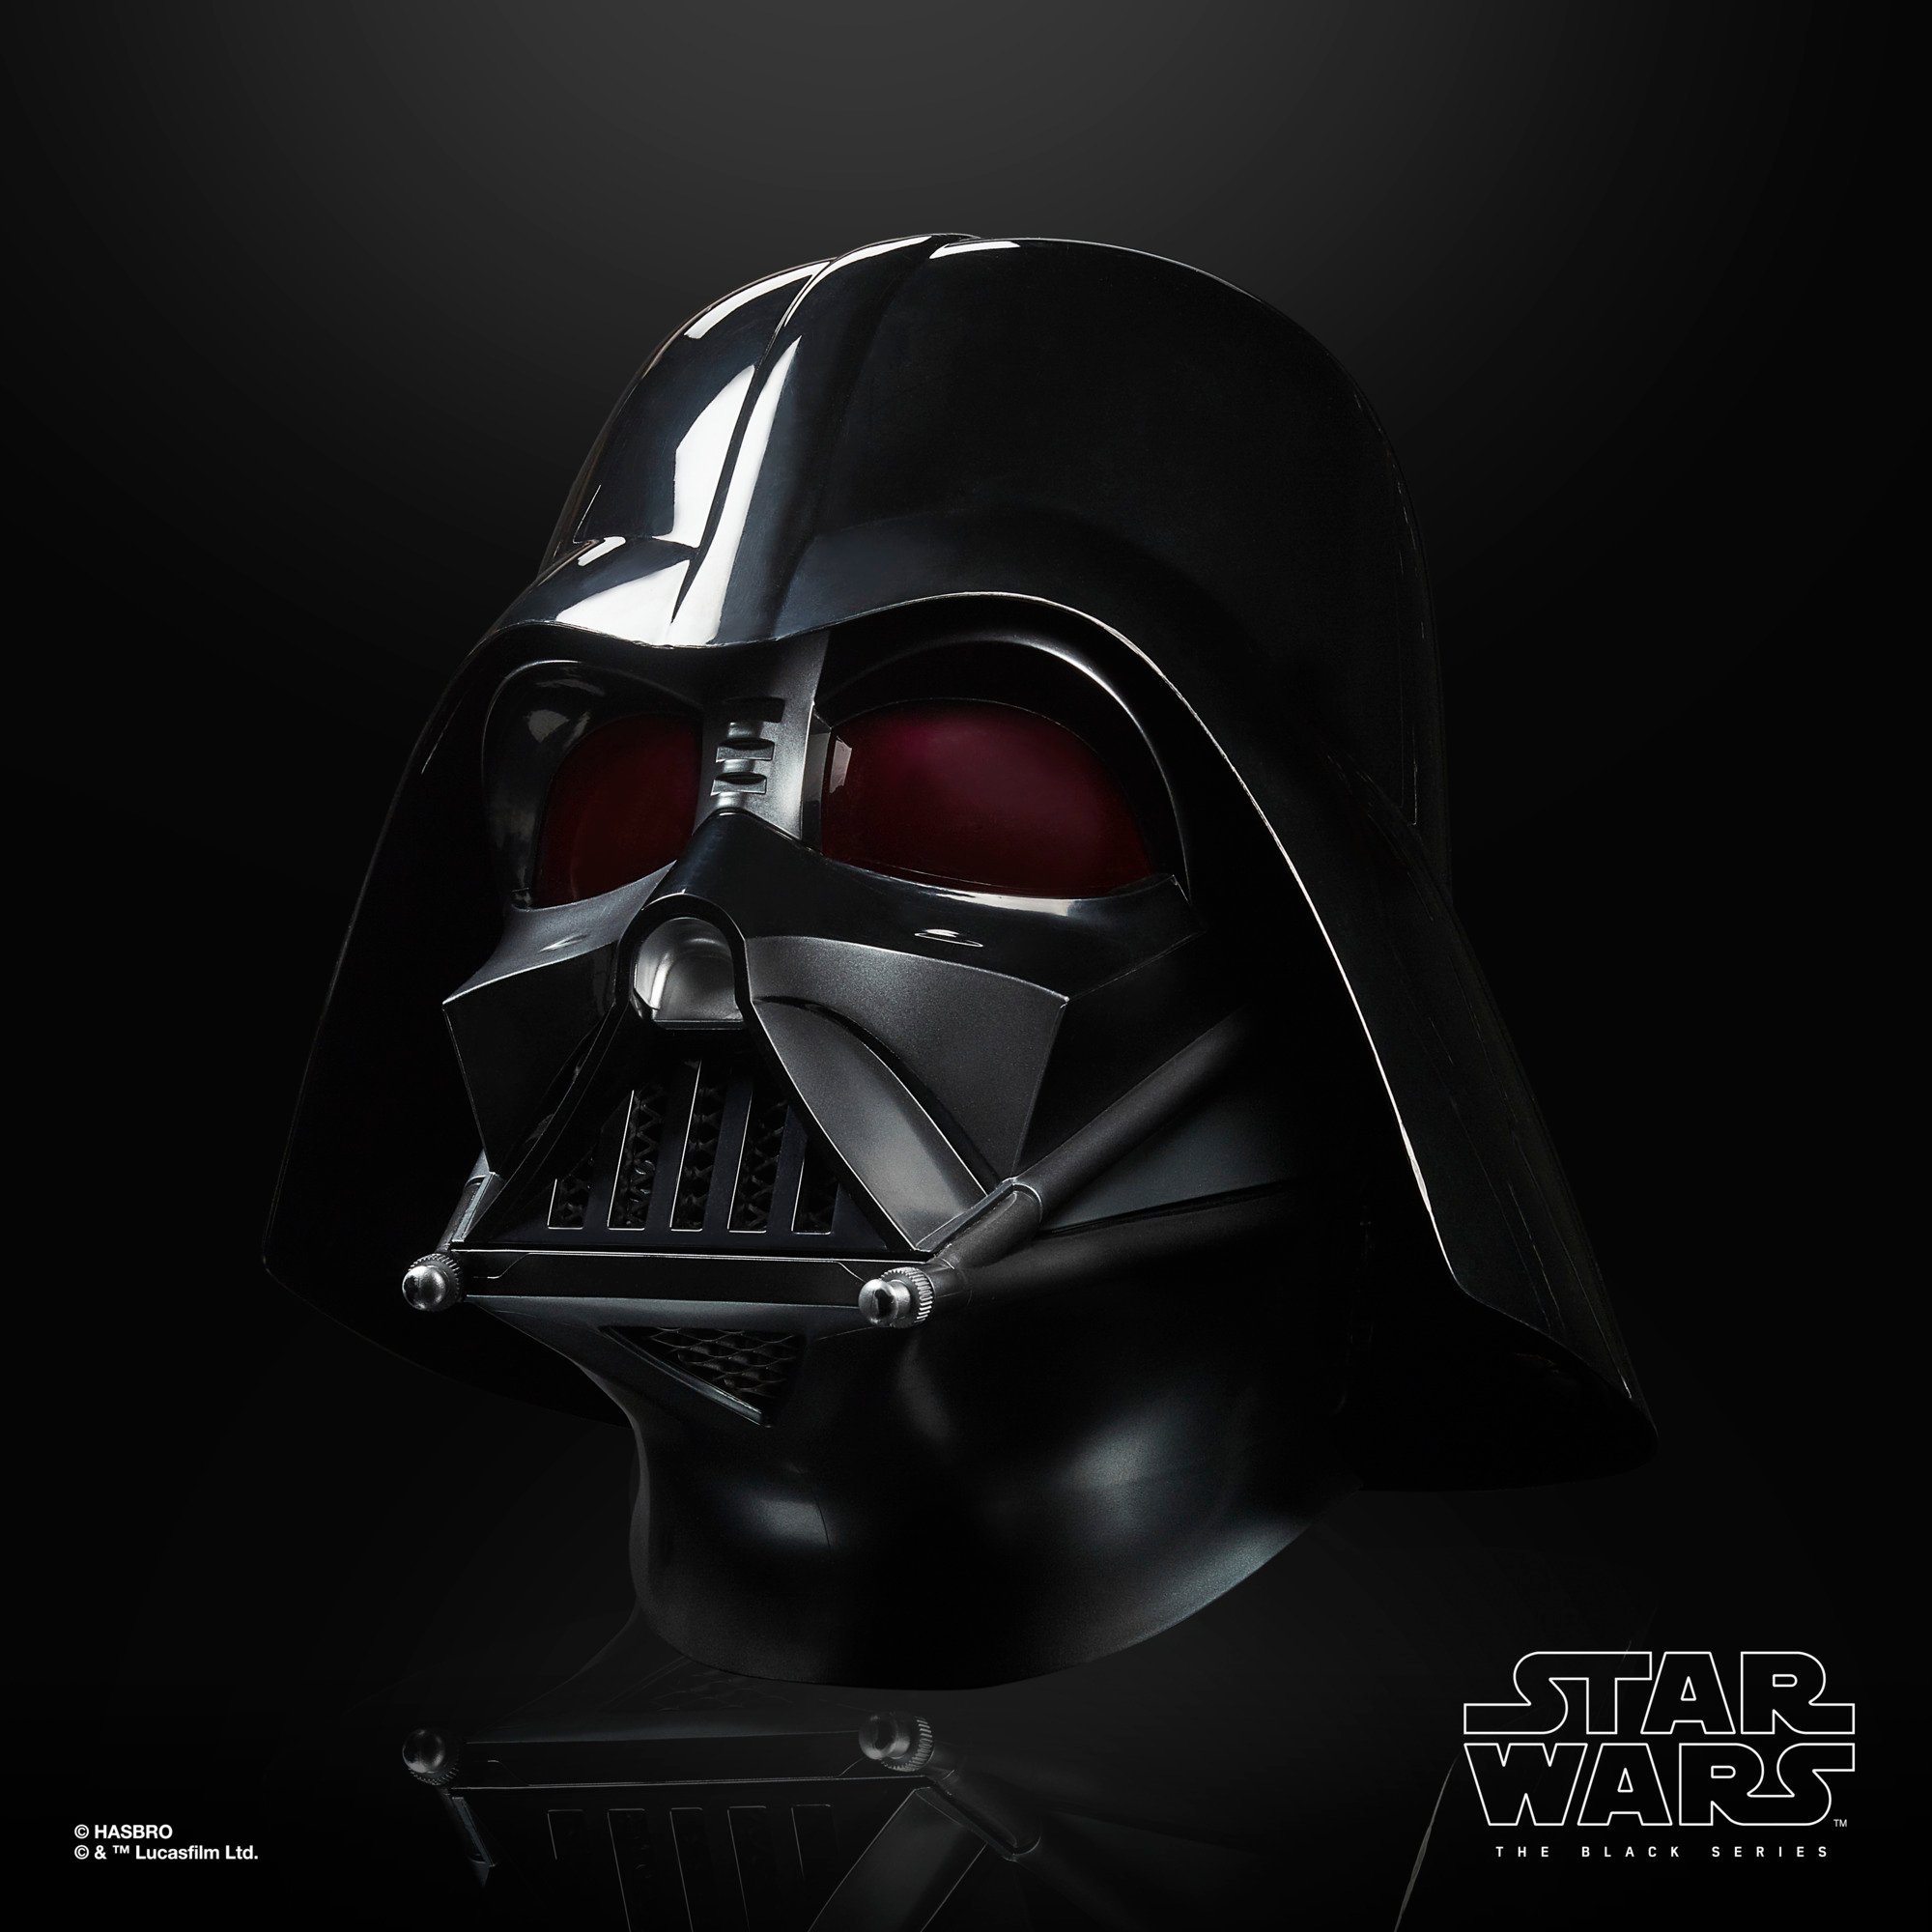 Interpretatief fiets De andere dag New Darth Vader Helmet and More Hasbro May 4th Reveals - Star Wars News Net